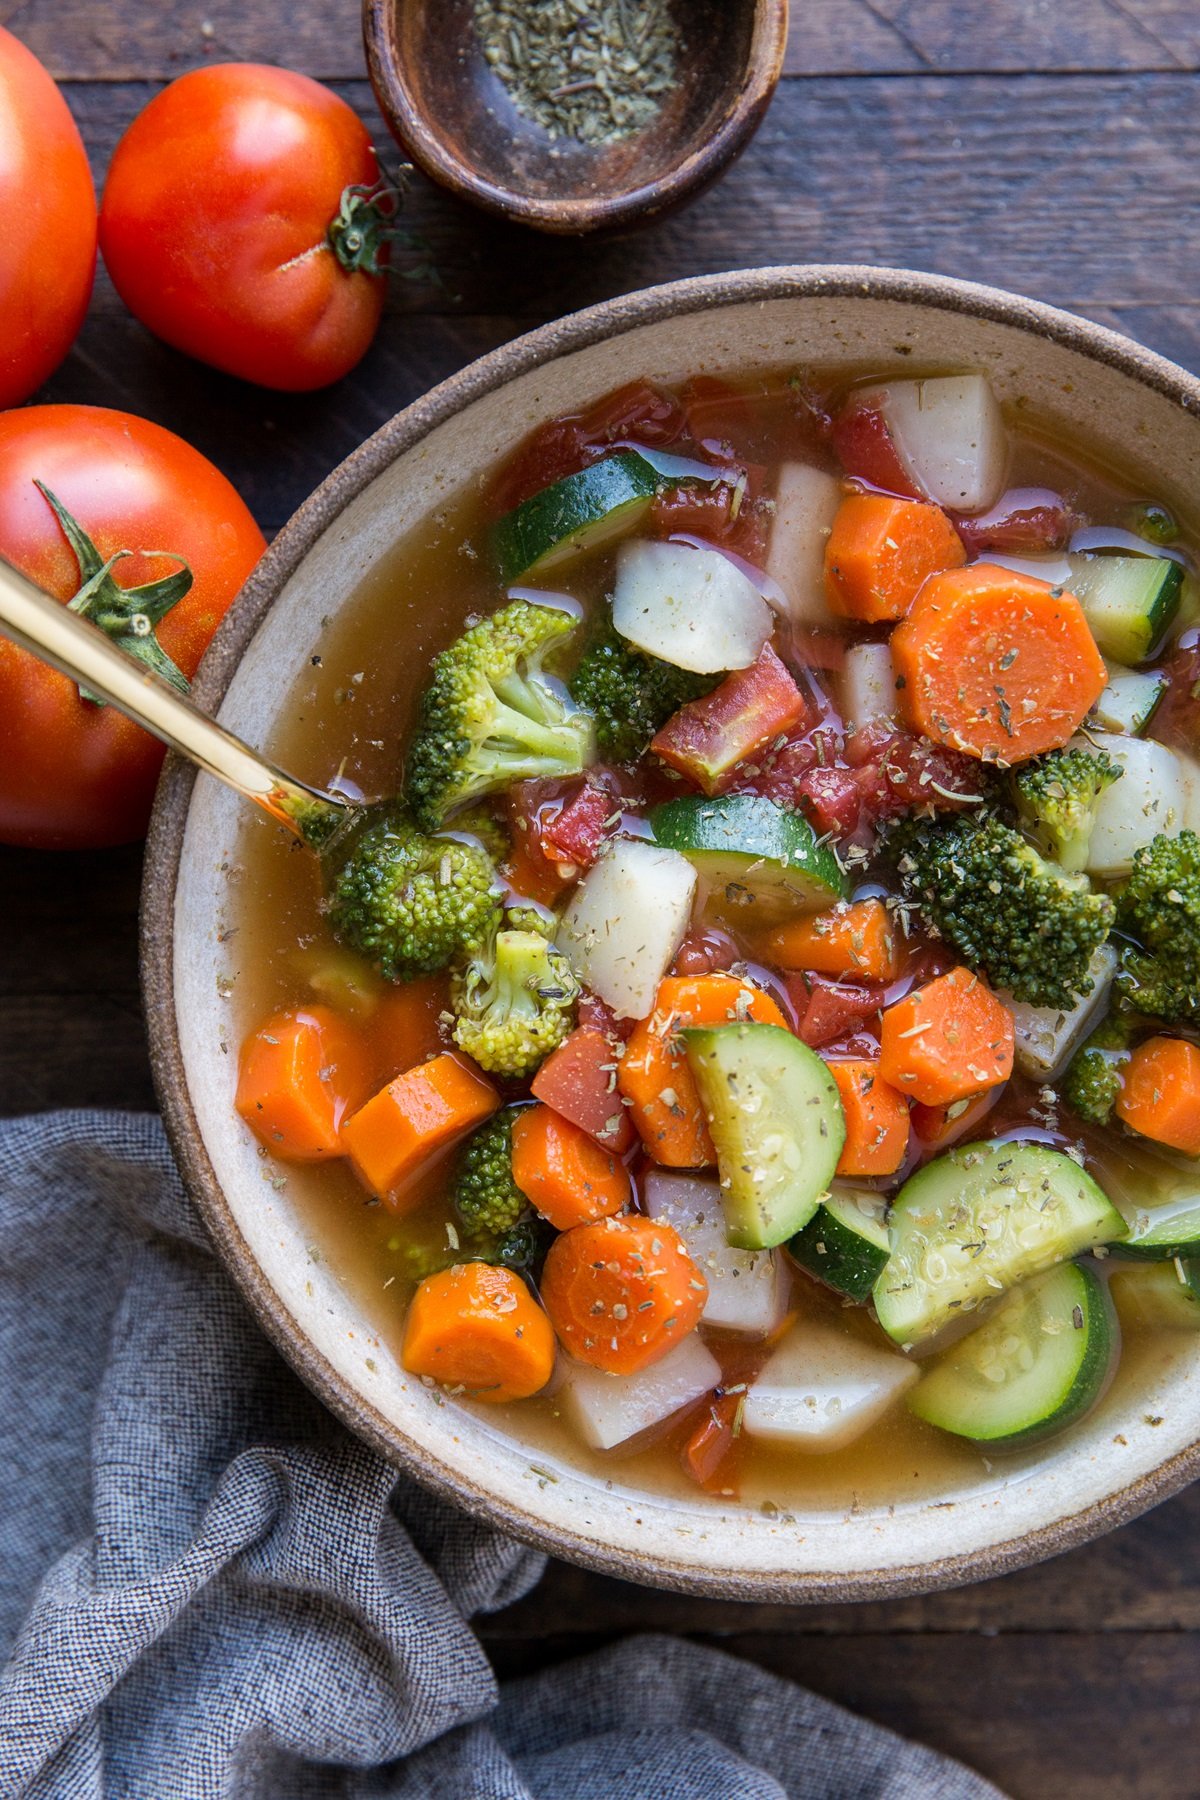 Vegan Carrot Soup Recipe: How to Make It